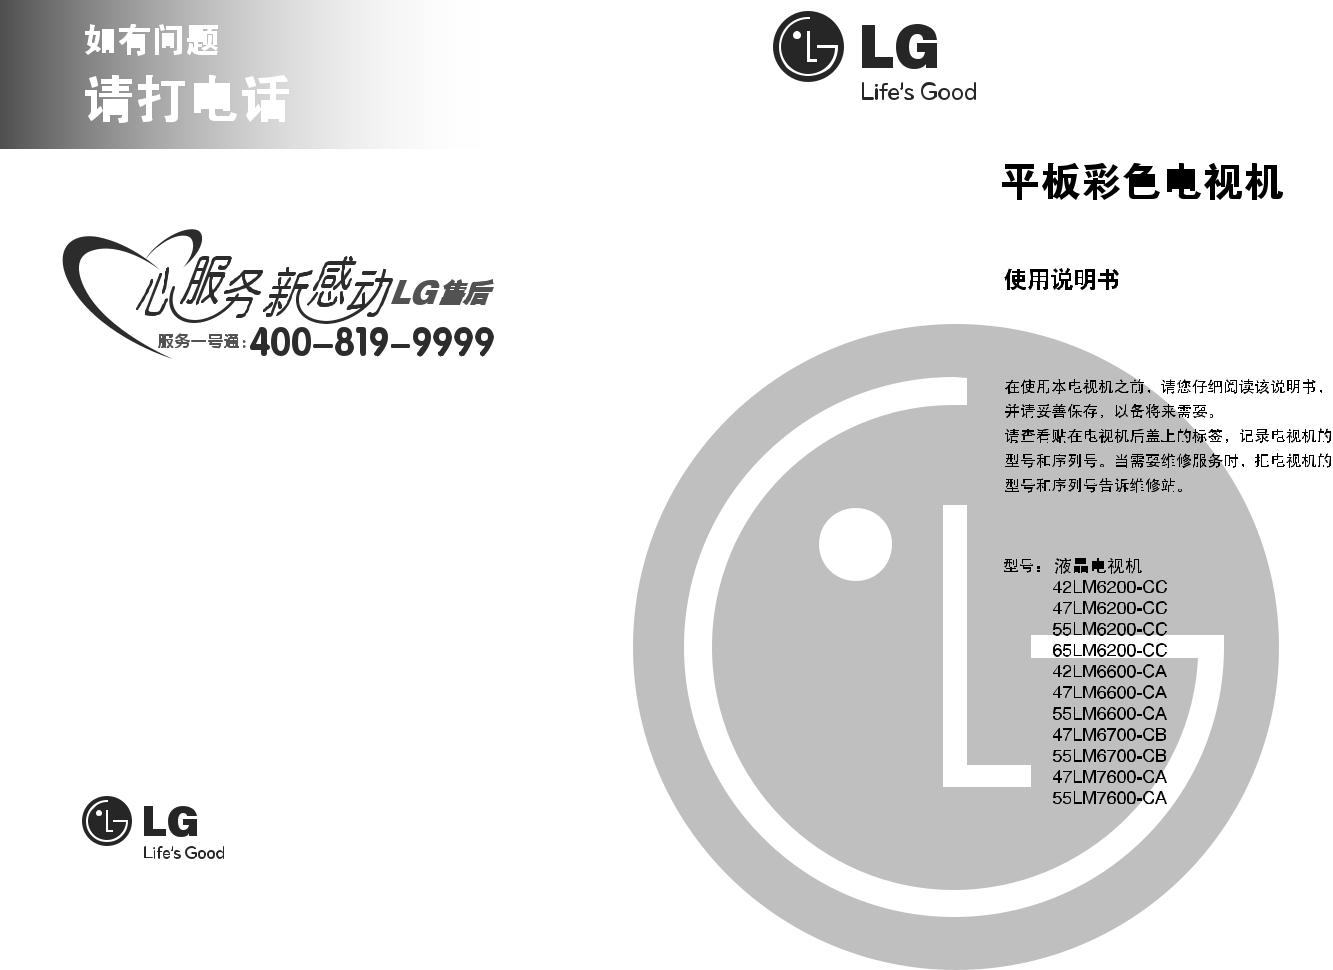 Lg 55LM6200-CC, 55LM7600-CA, 55LM6700-CB, 47LM6600-CA, 42LM6600-CA User Manual